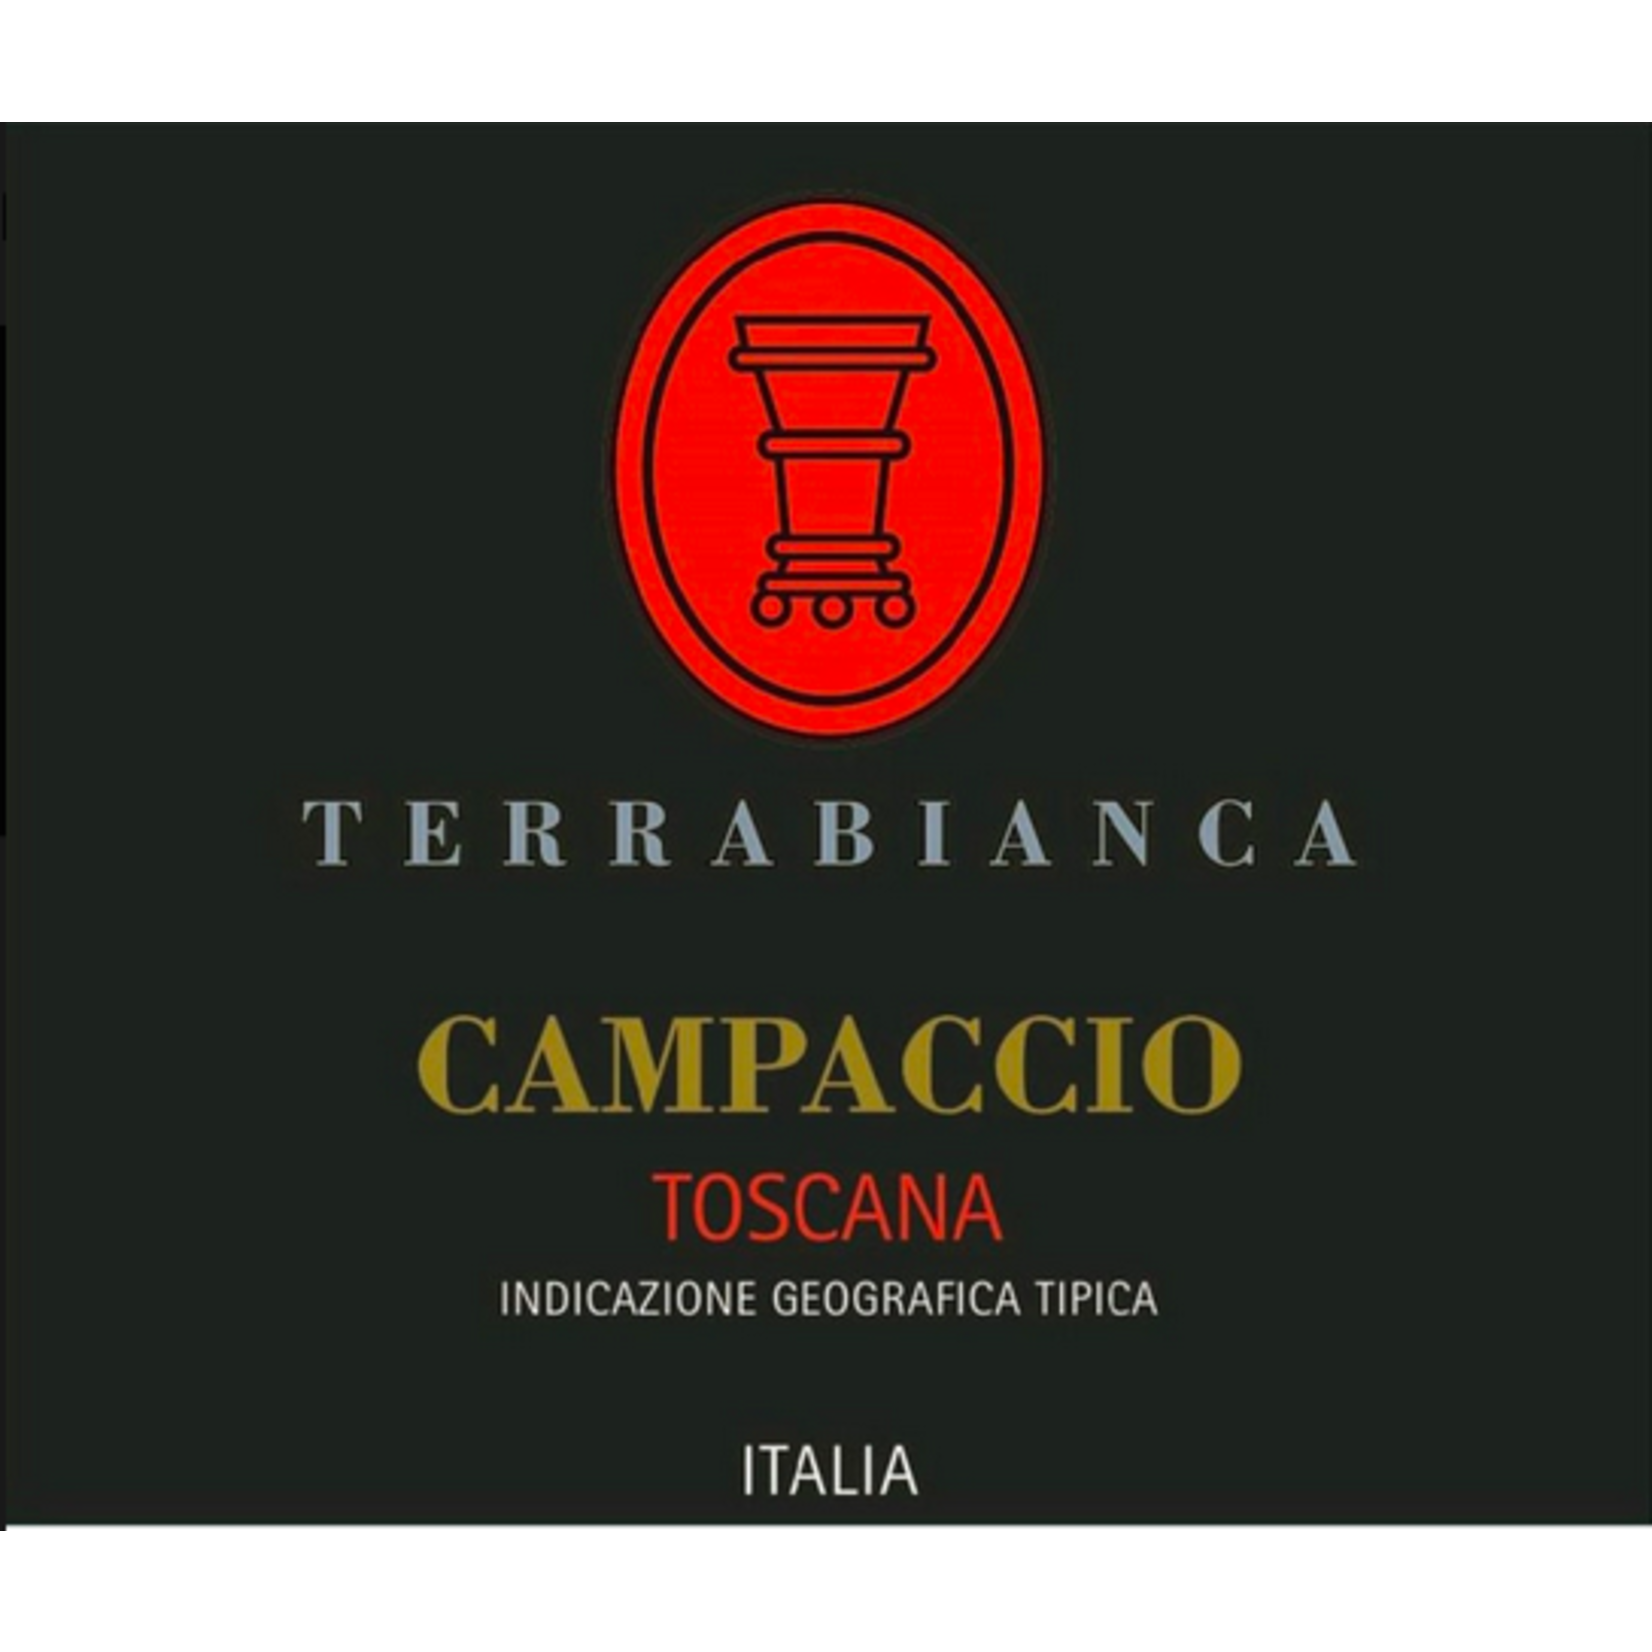 Arillo in Terrabianca Terrabianca Campaccio Toscana Arillo 2019  Italy